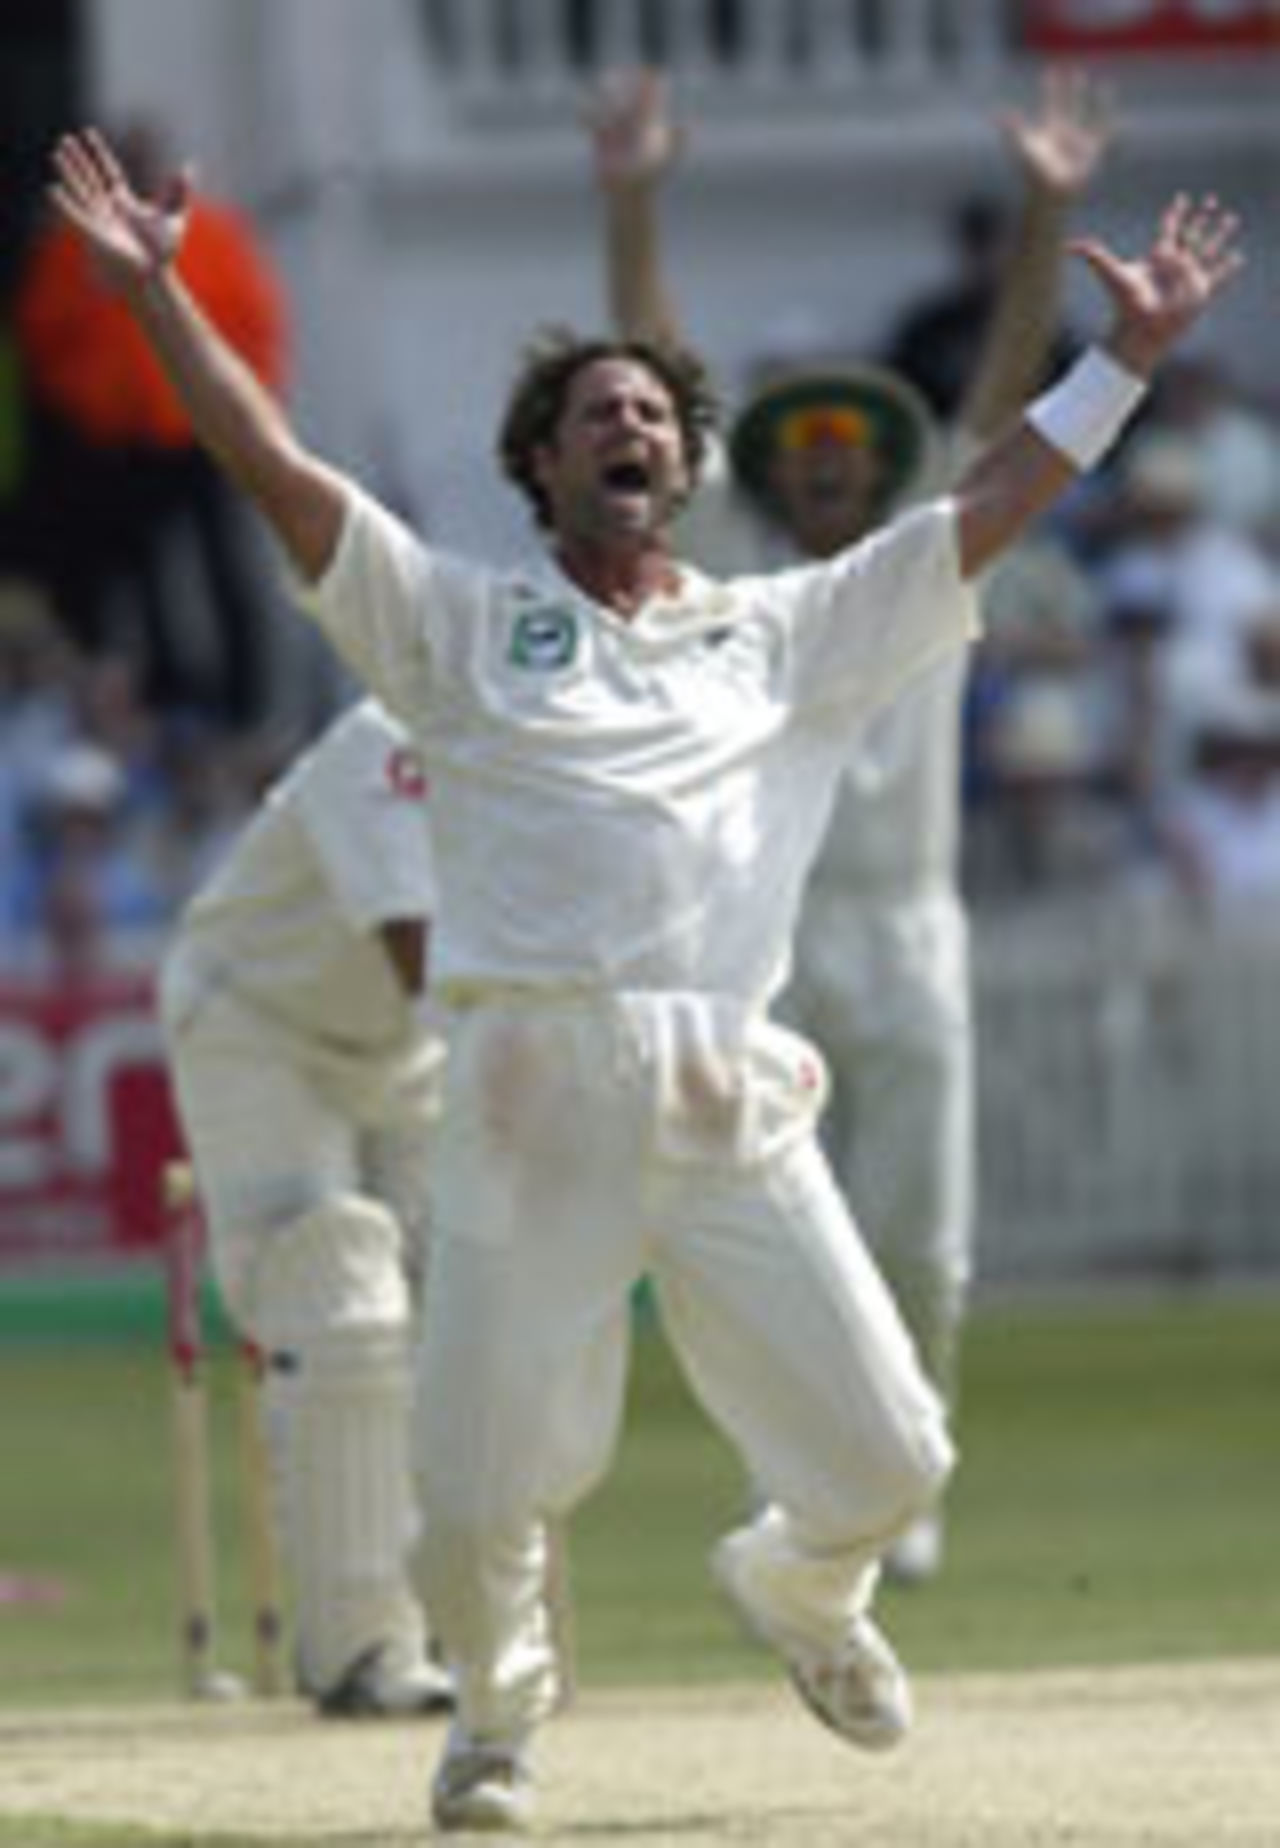 Chris Cairns appeals for the wicket of Mark Butcher, England v New Zealand, 3rd Test, Trent Bridge, June 13, 2004